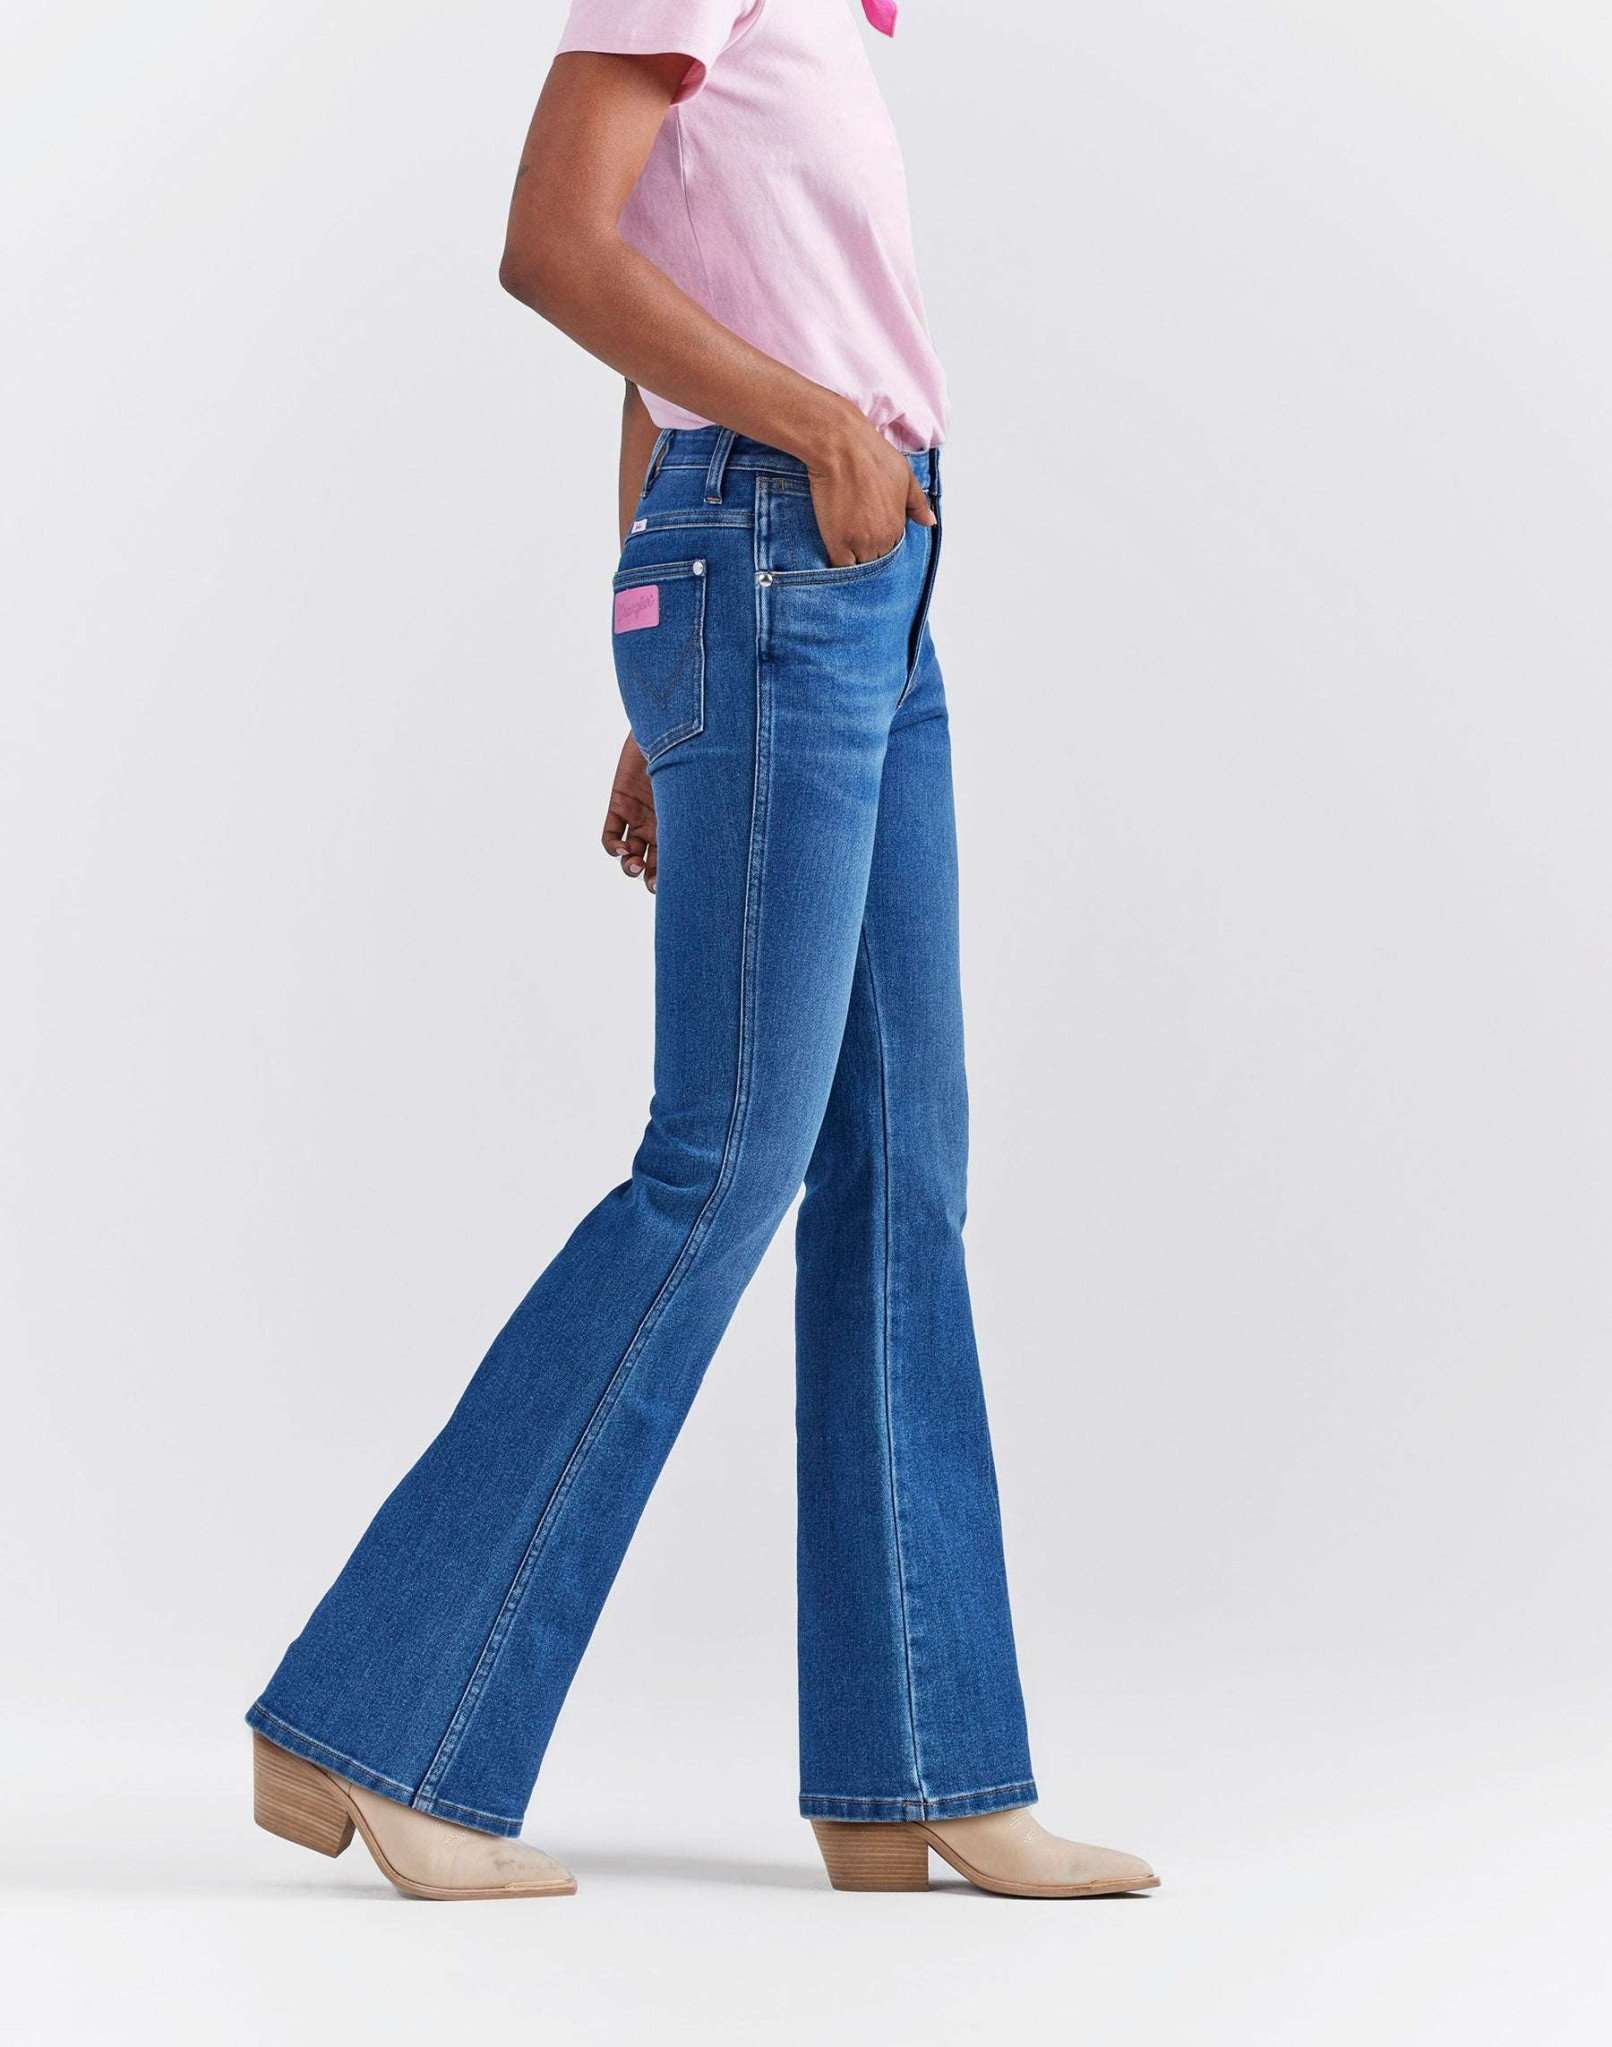 Wrangler X Barbie™ - Westward in Wrangler Blue Jeans Wrangler   